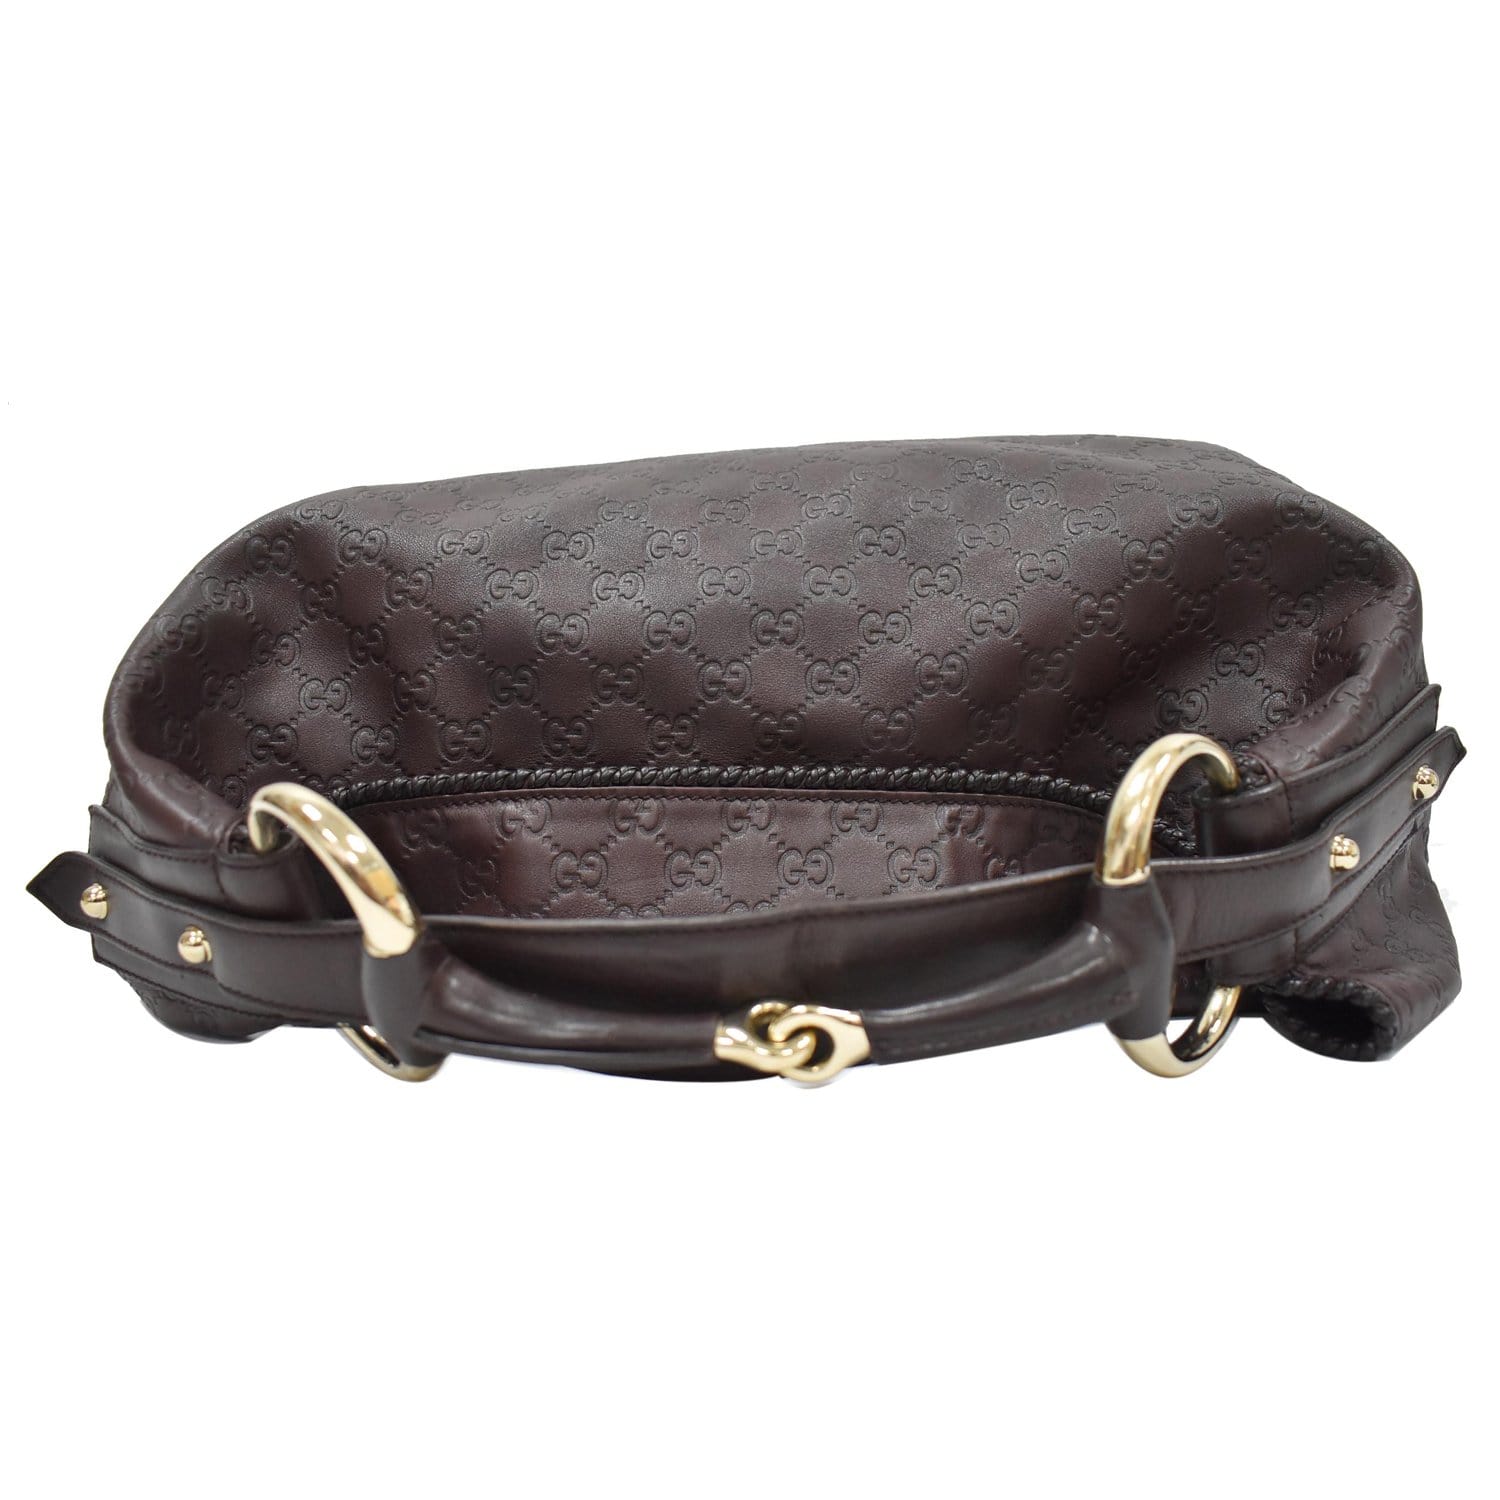 Gucci handbag bag 114900 HORSEBIT HOBO L BLACK LEATHER BLACK